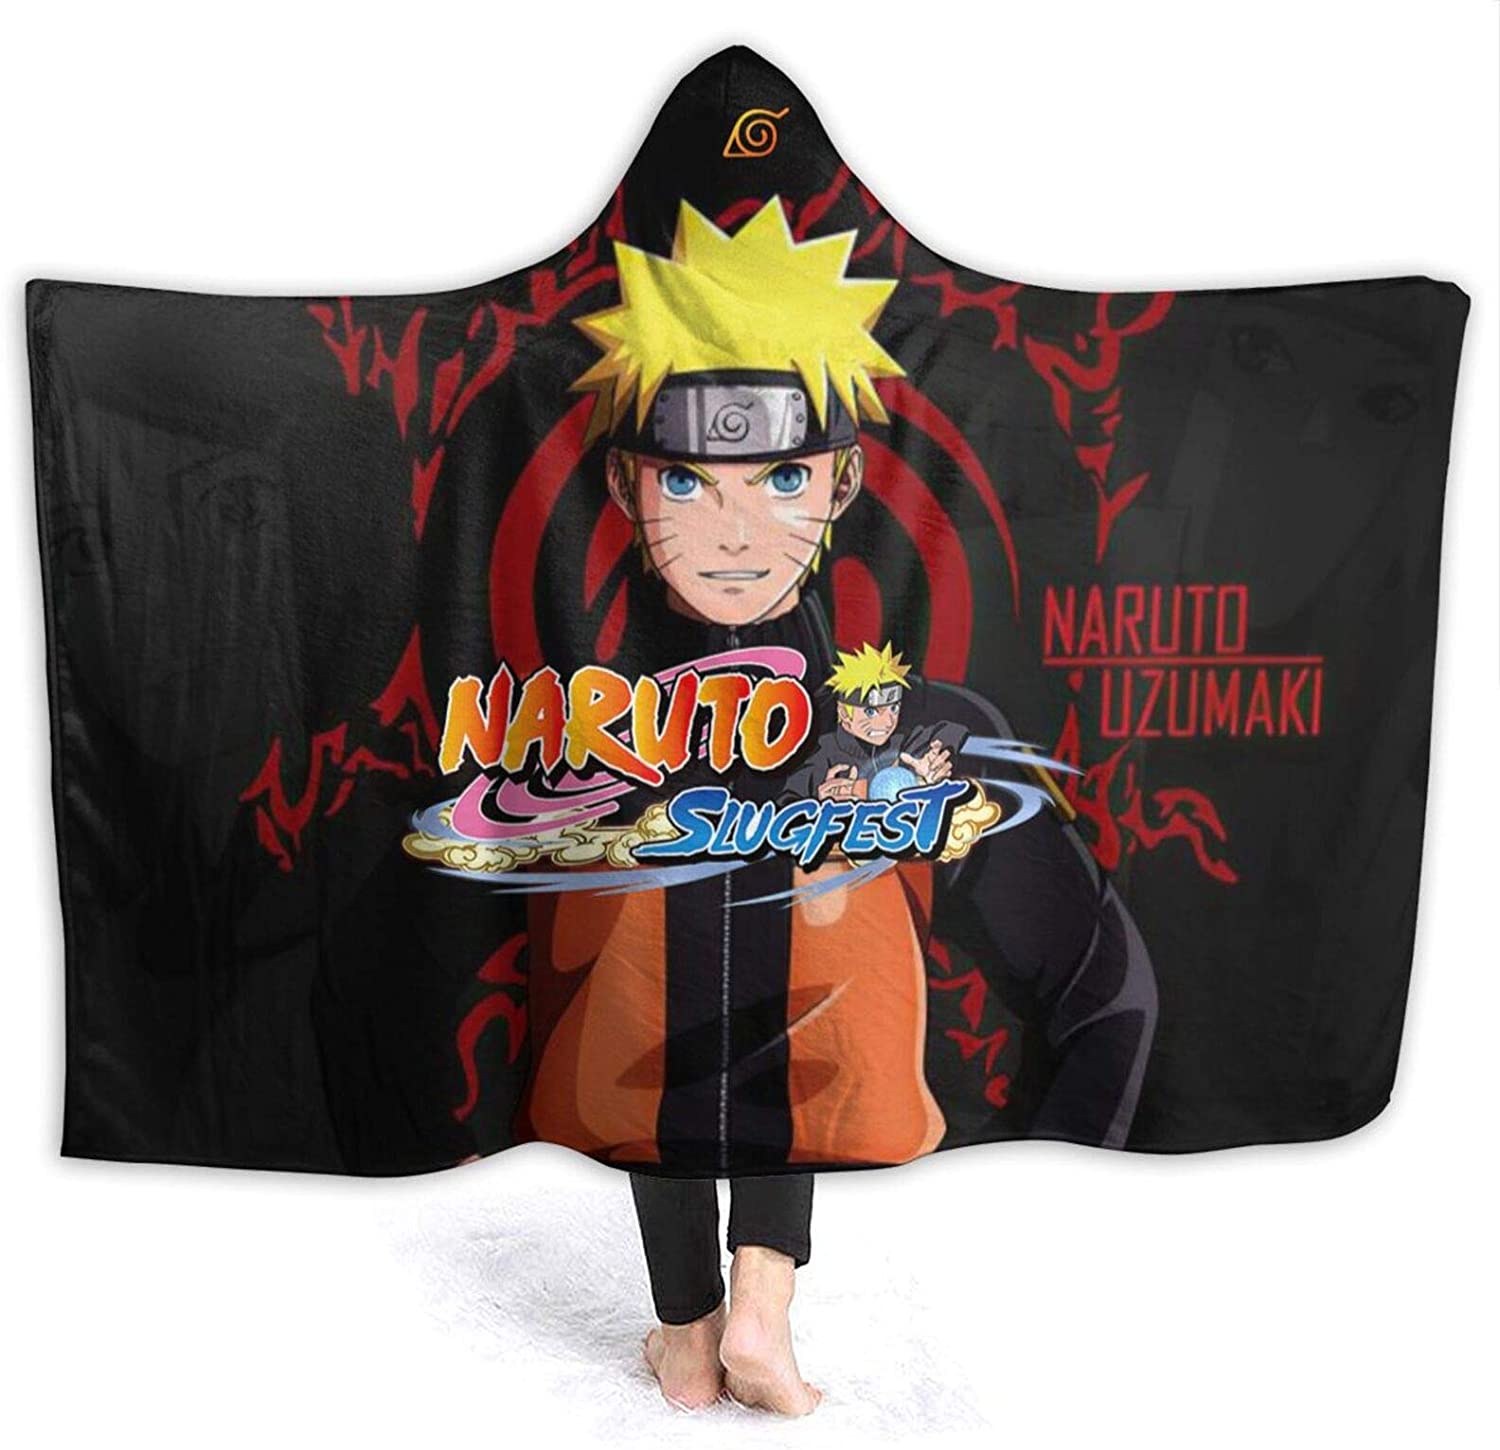 Naruto Chibi Anime Blanket